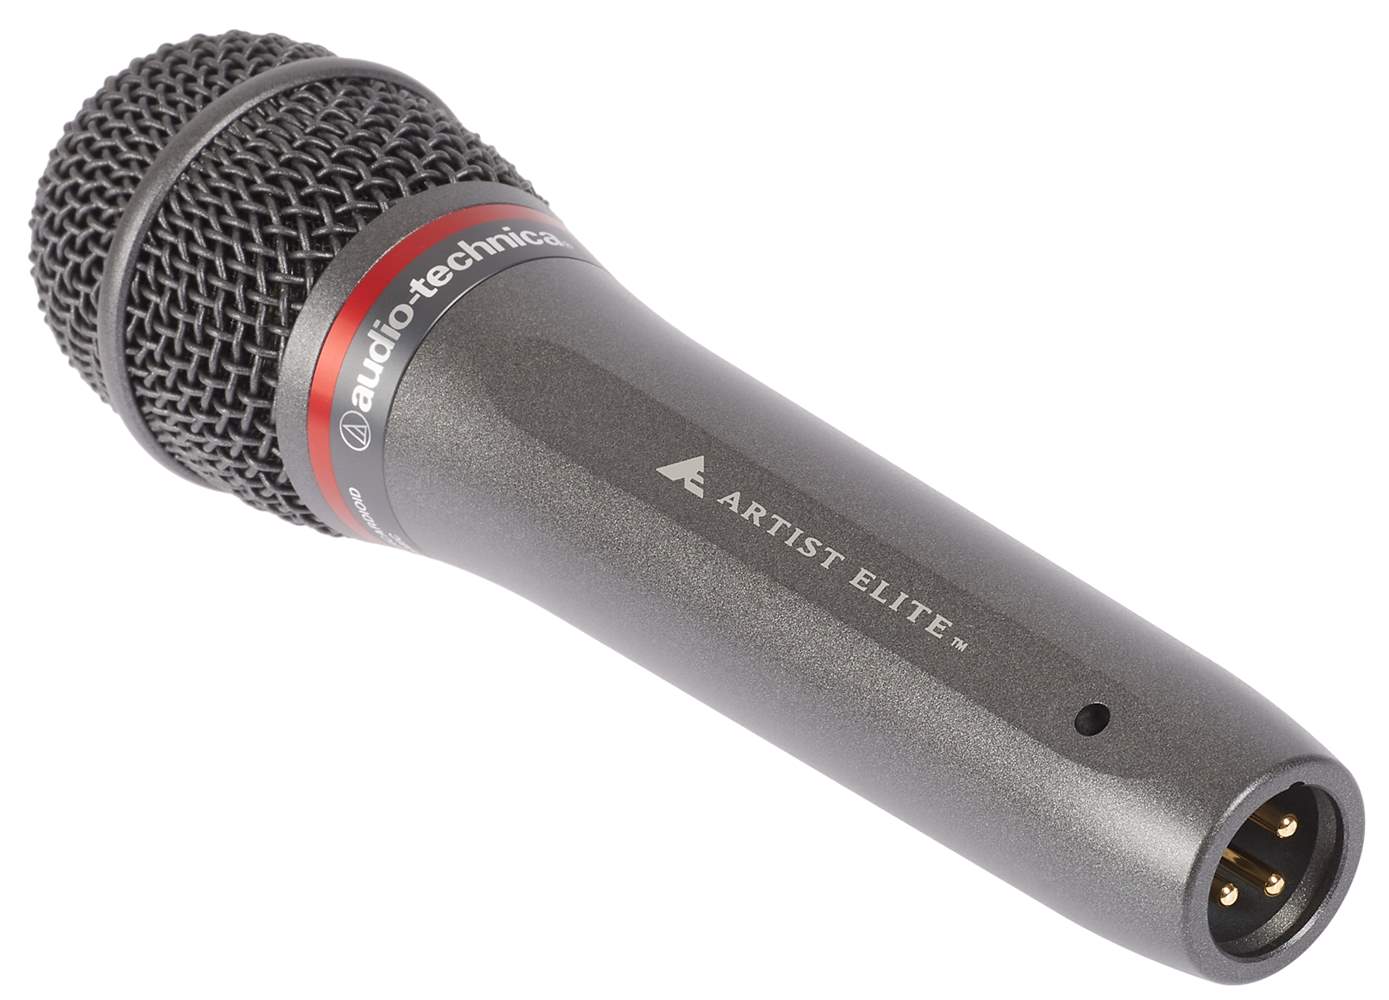 AUDIO-TECHNICA AE6100 Dynamic Microphone | Kytary.ie